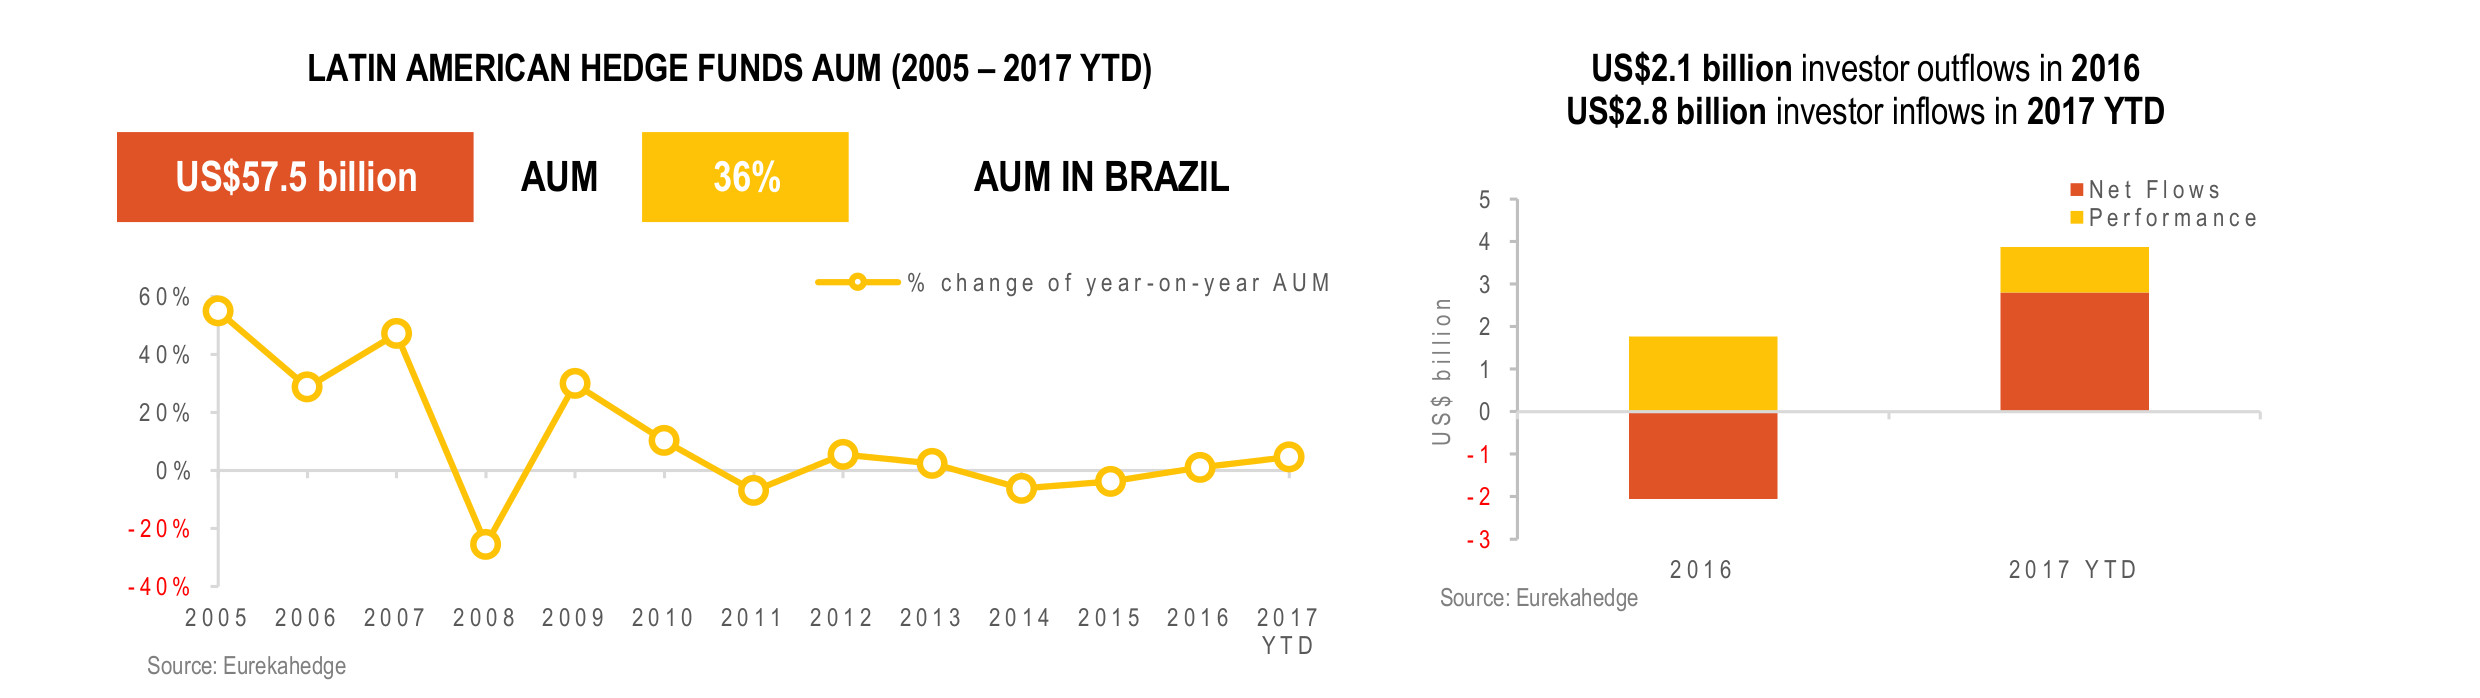 Latin American Hedge Fund Infographic June 2017- AUM